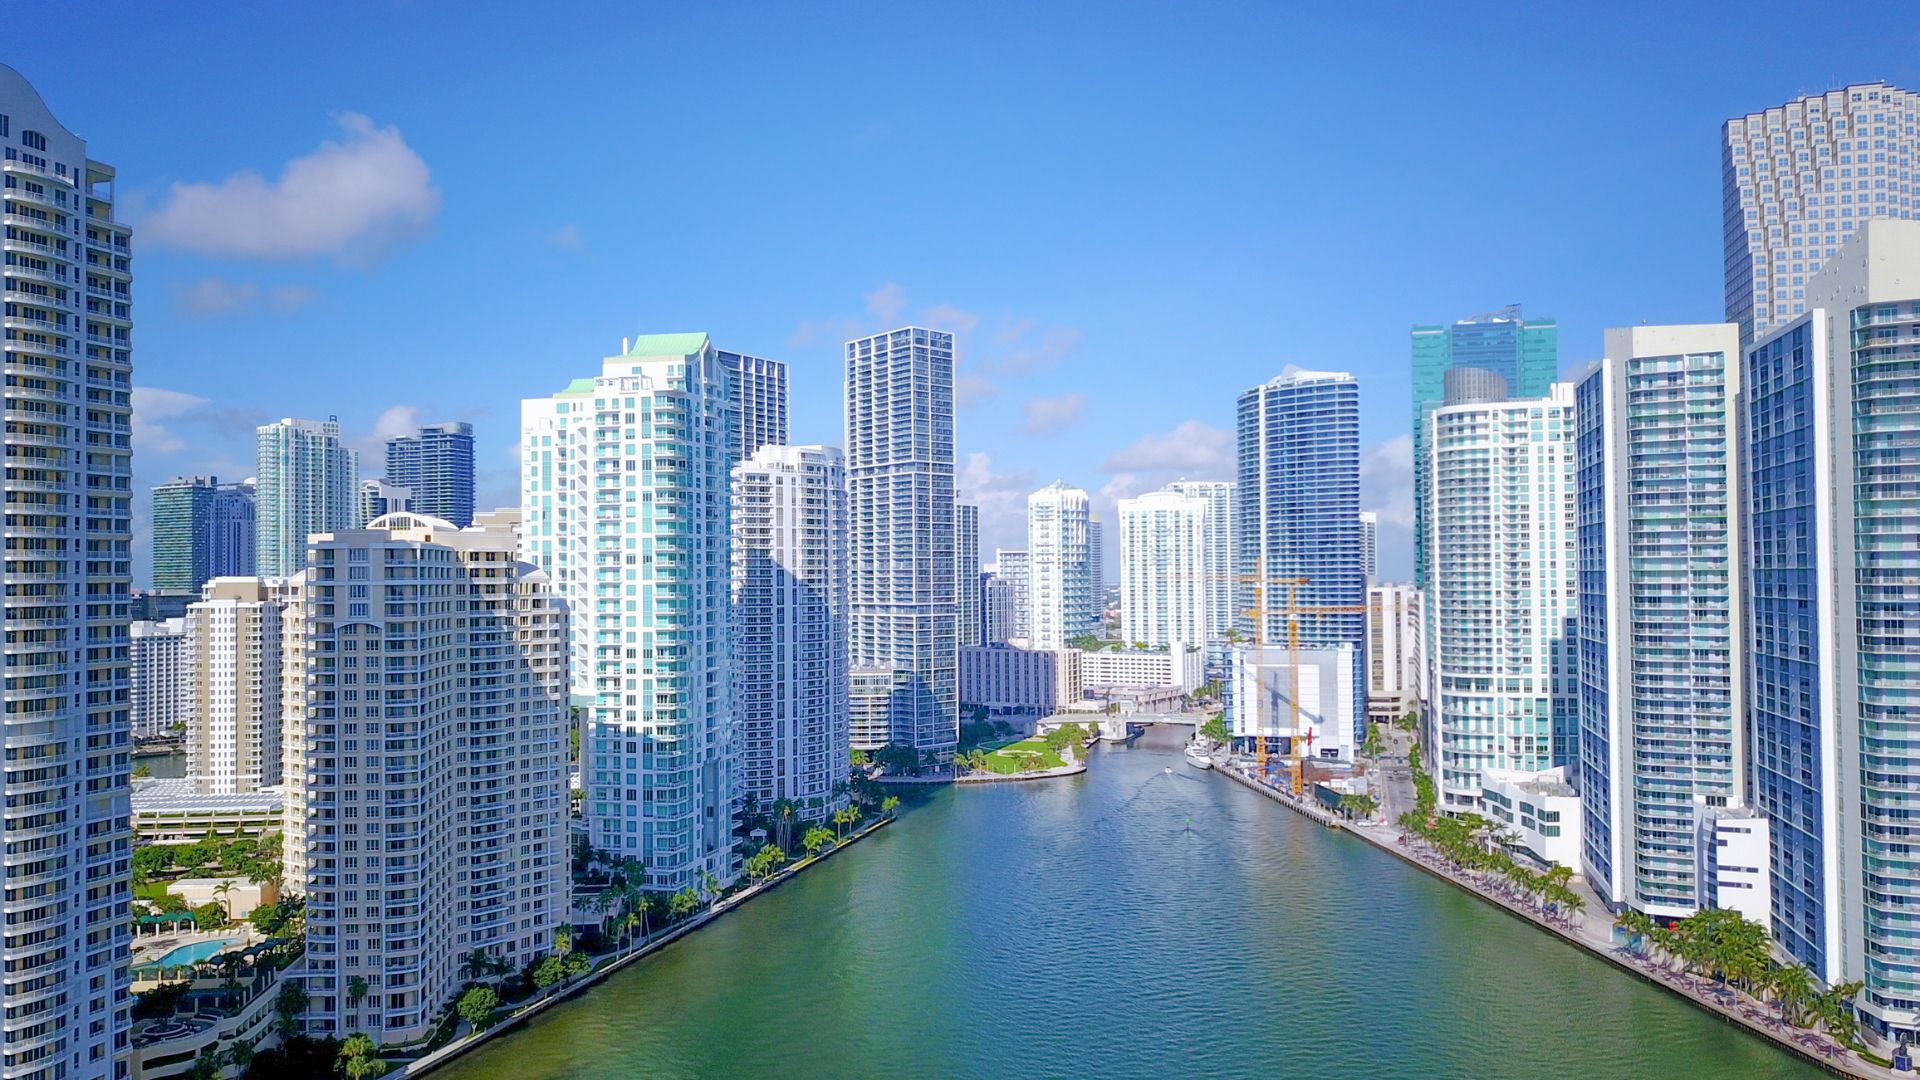 The Best Neighborhoods to Live in Miami